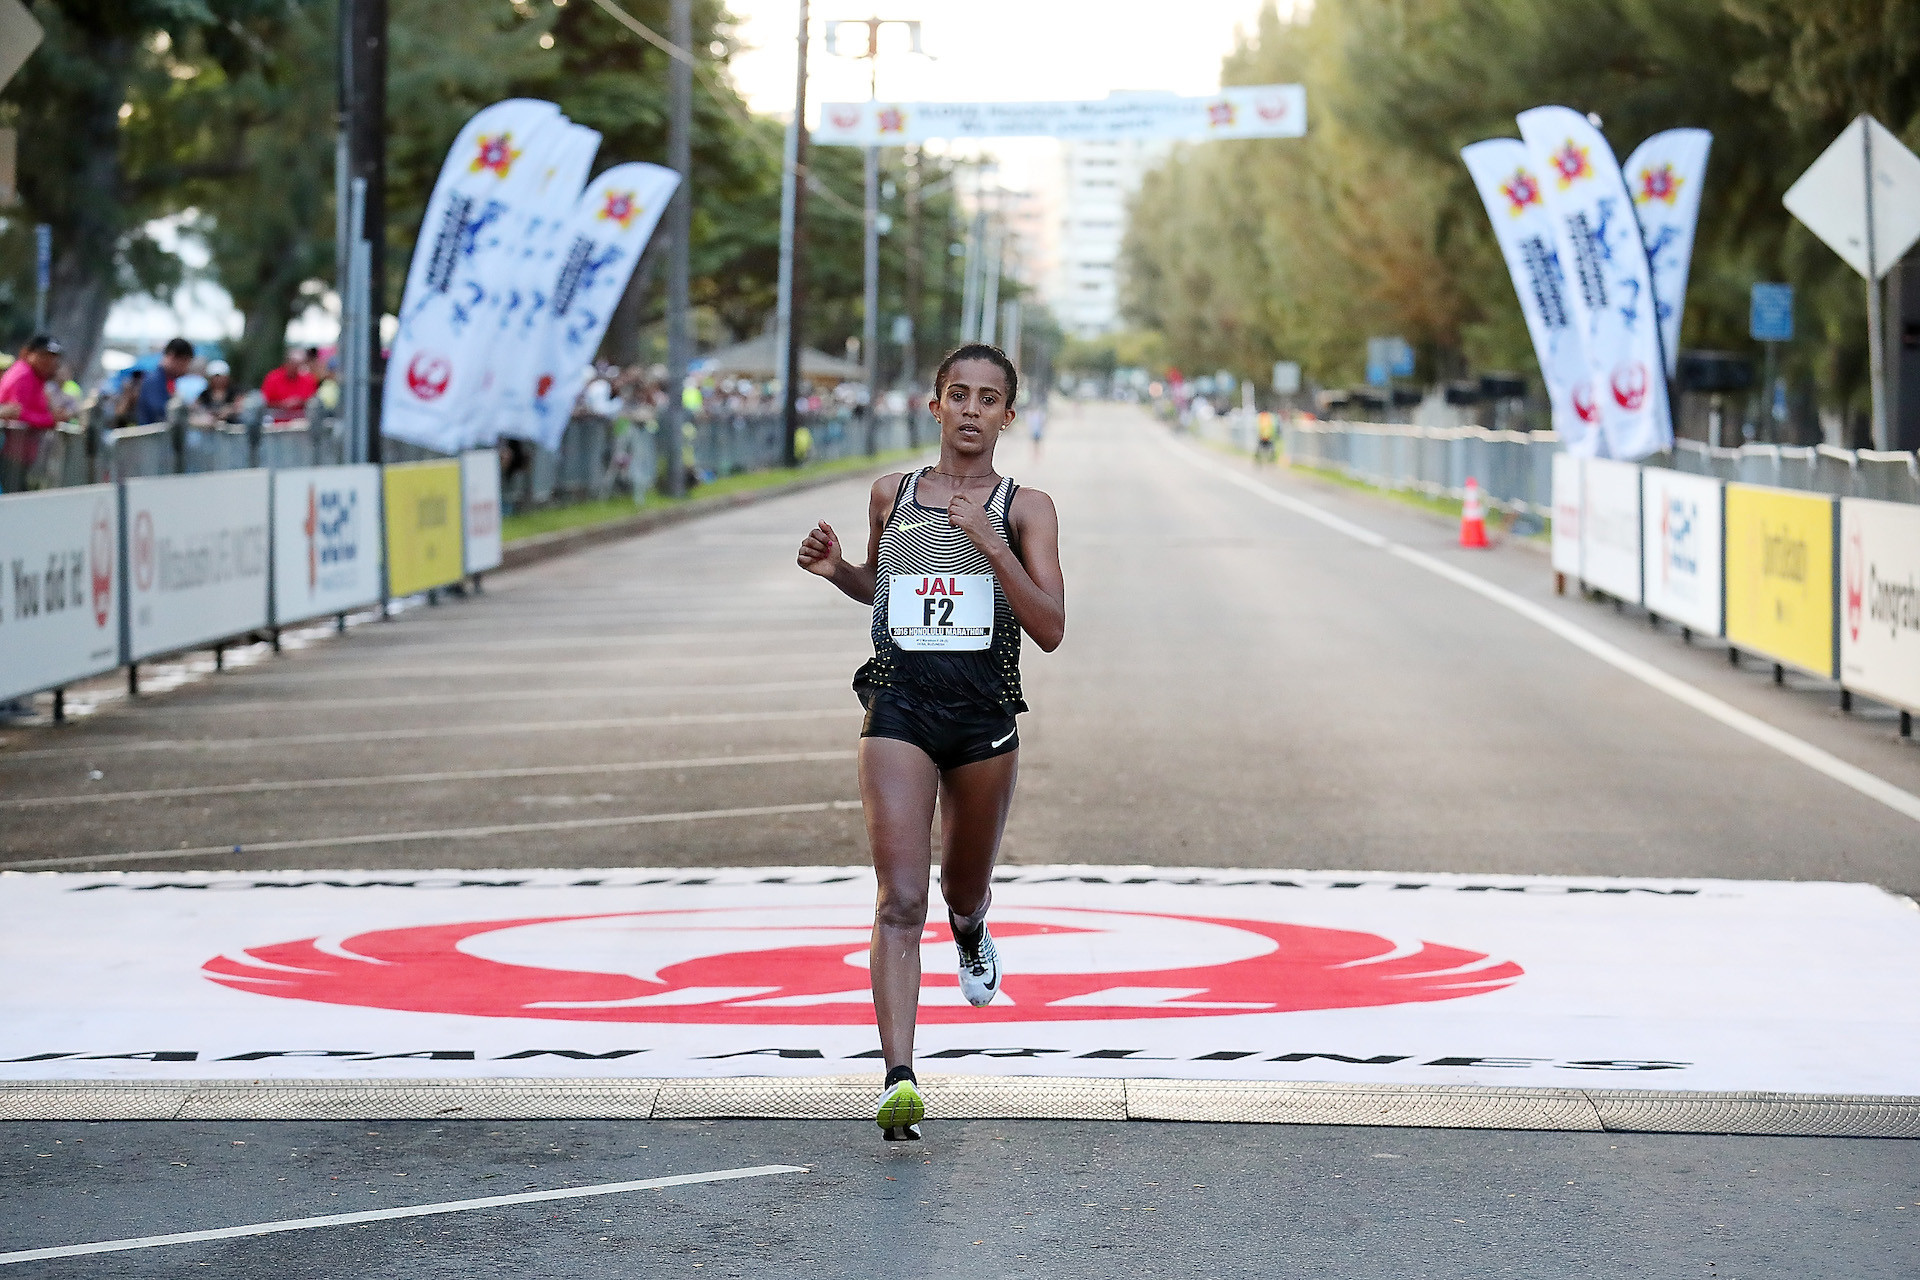 Rightful 2014 Boston Marathon winner finally receives prize money